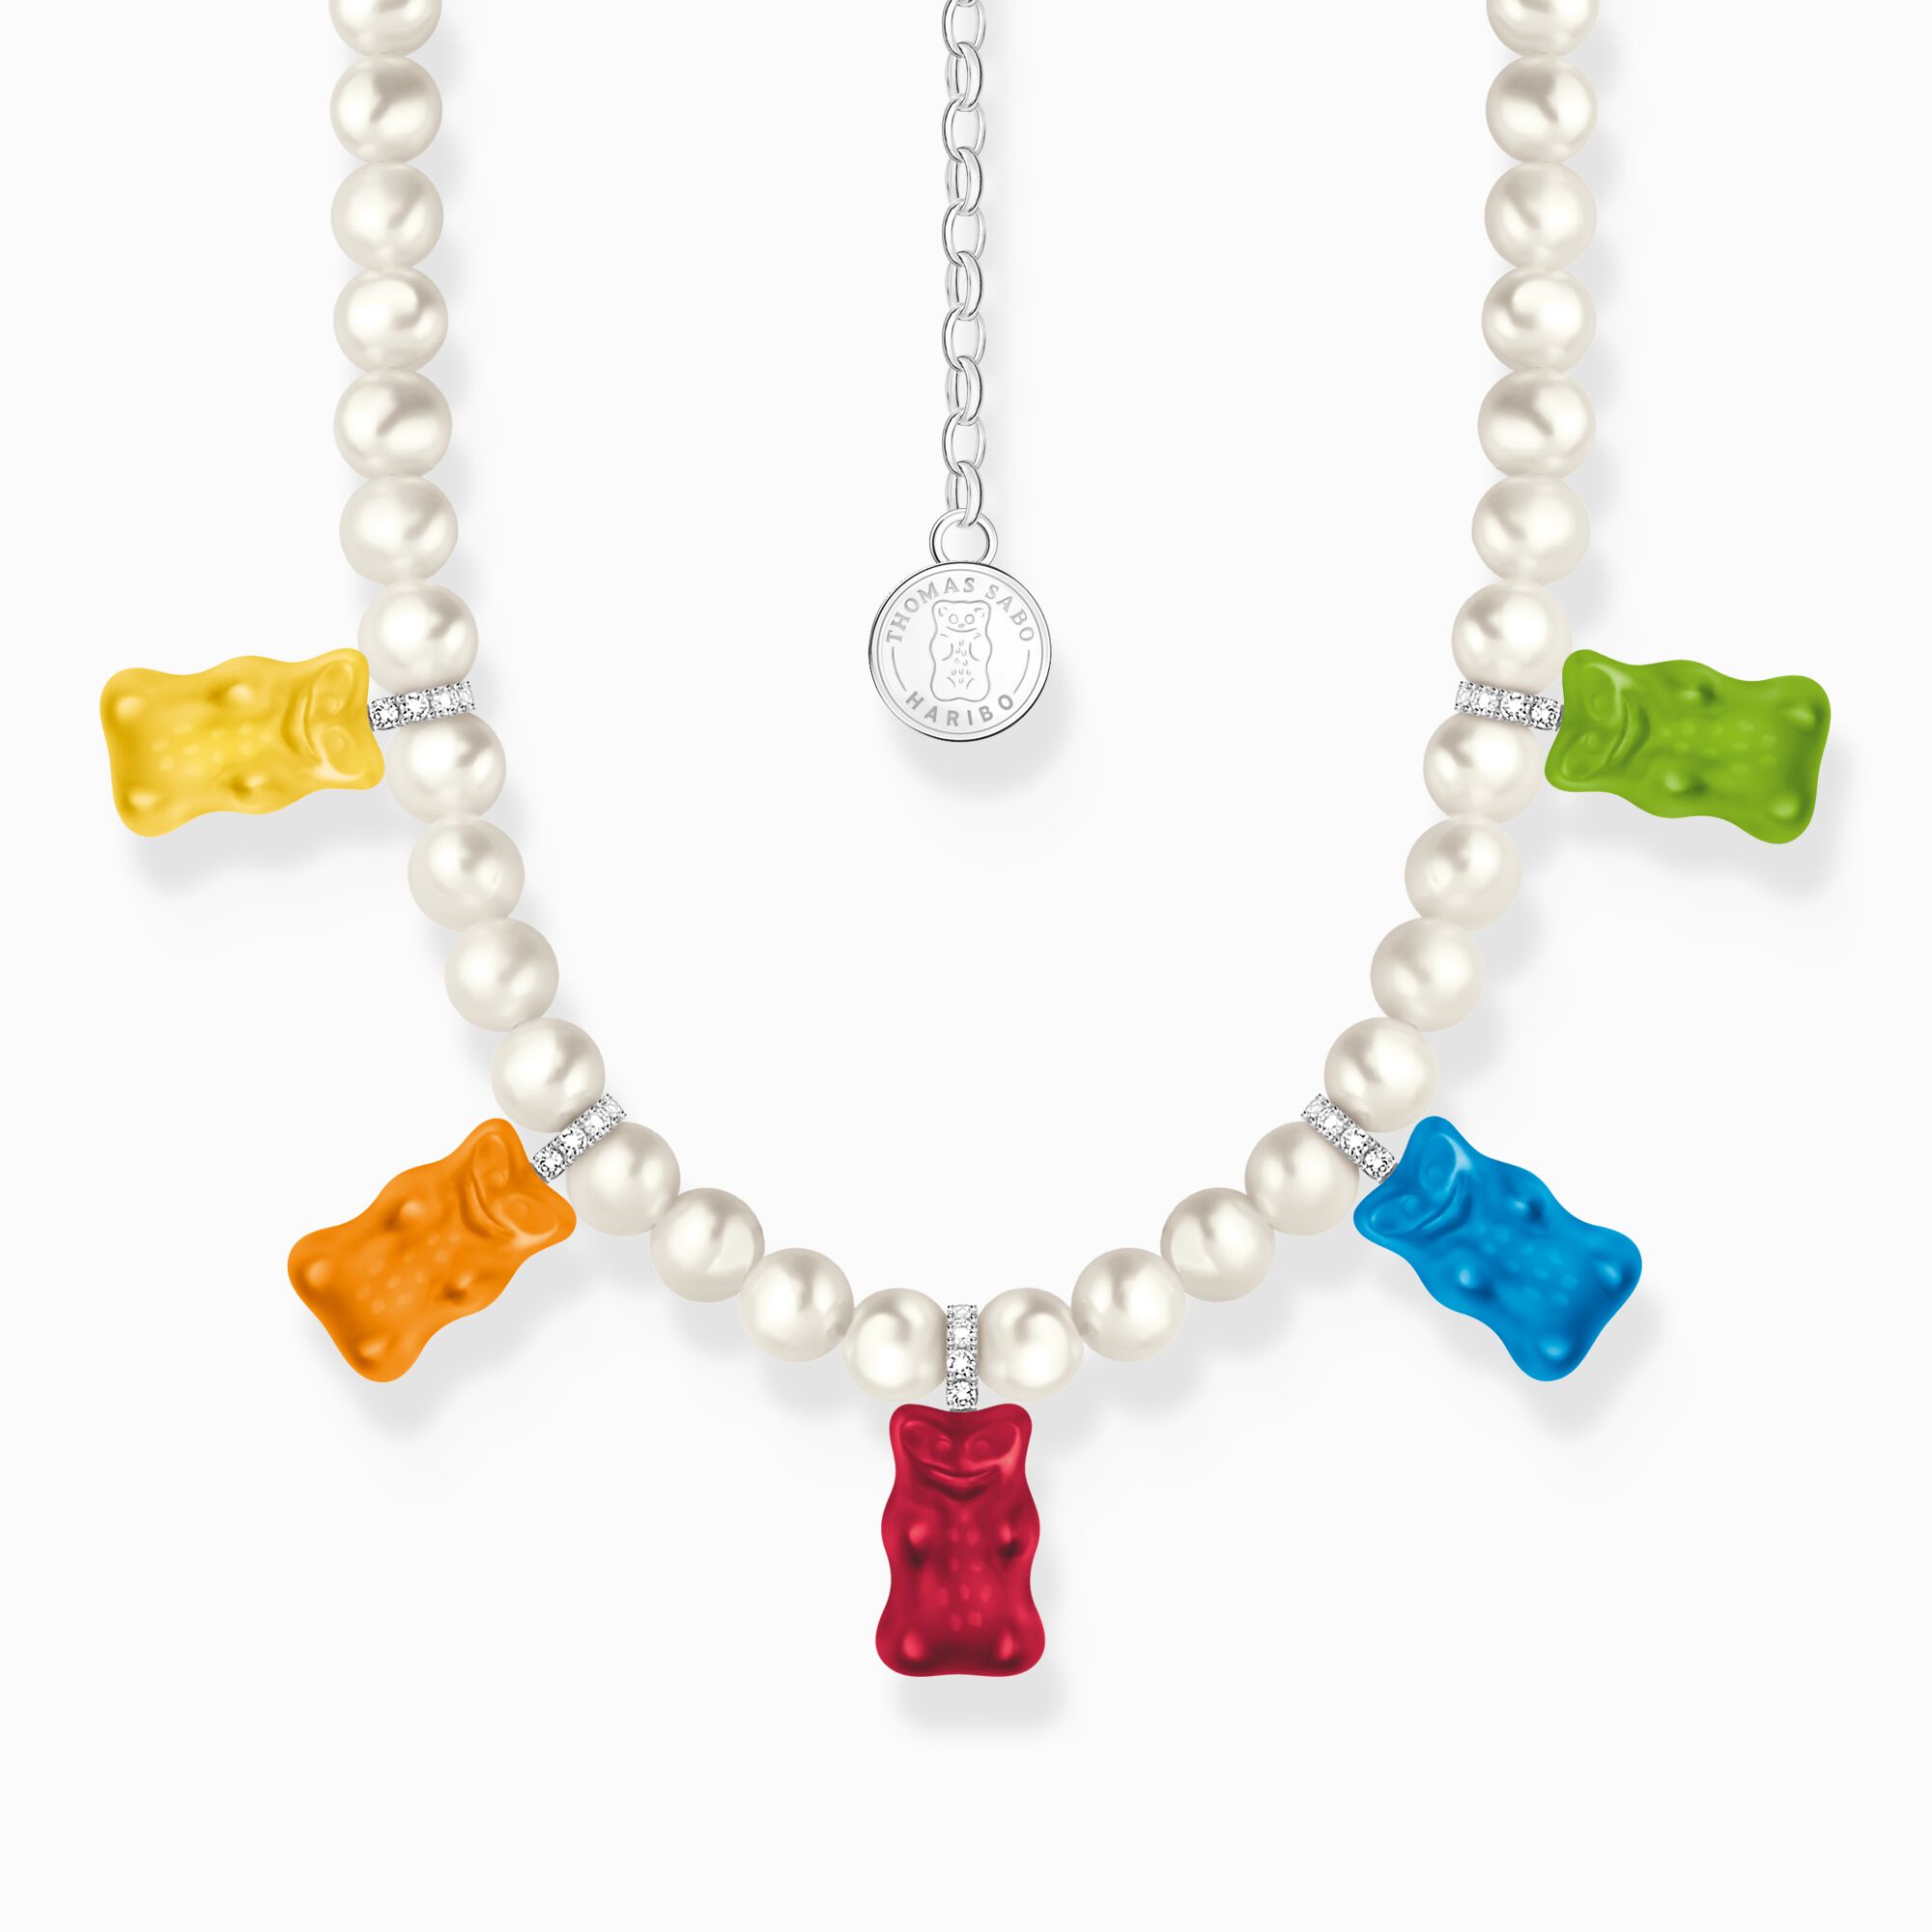 THOMAS SABO x HARIBO : Collier de perles avec Ours d&#39;or multicolores de la collection Charming Collection dans la boutique en ligne de THOMAS SABO